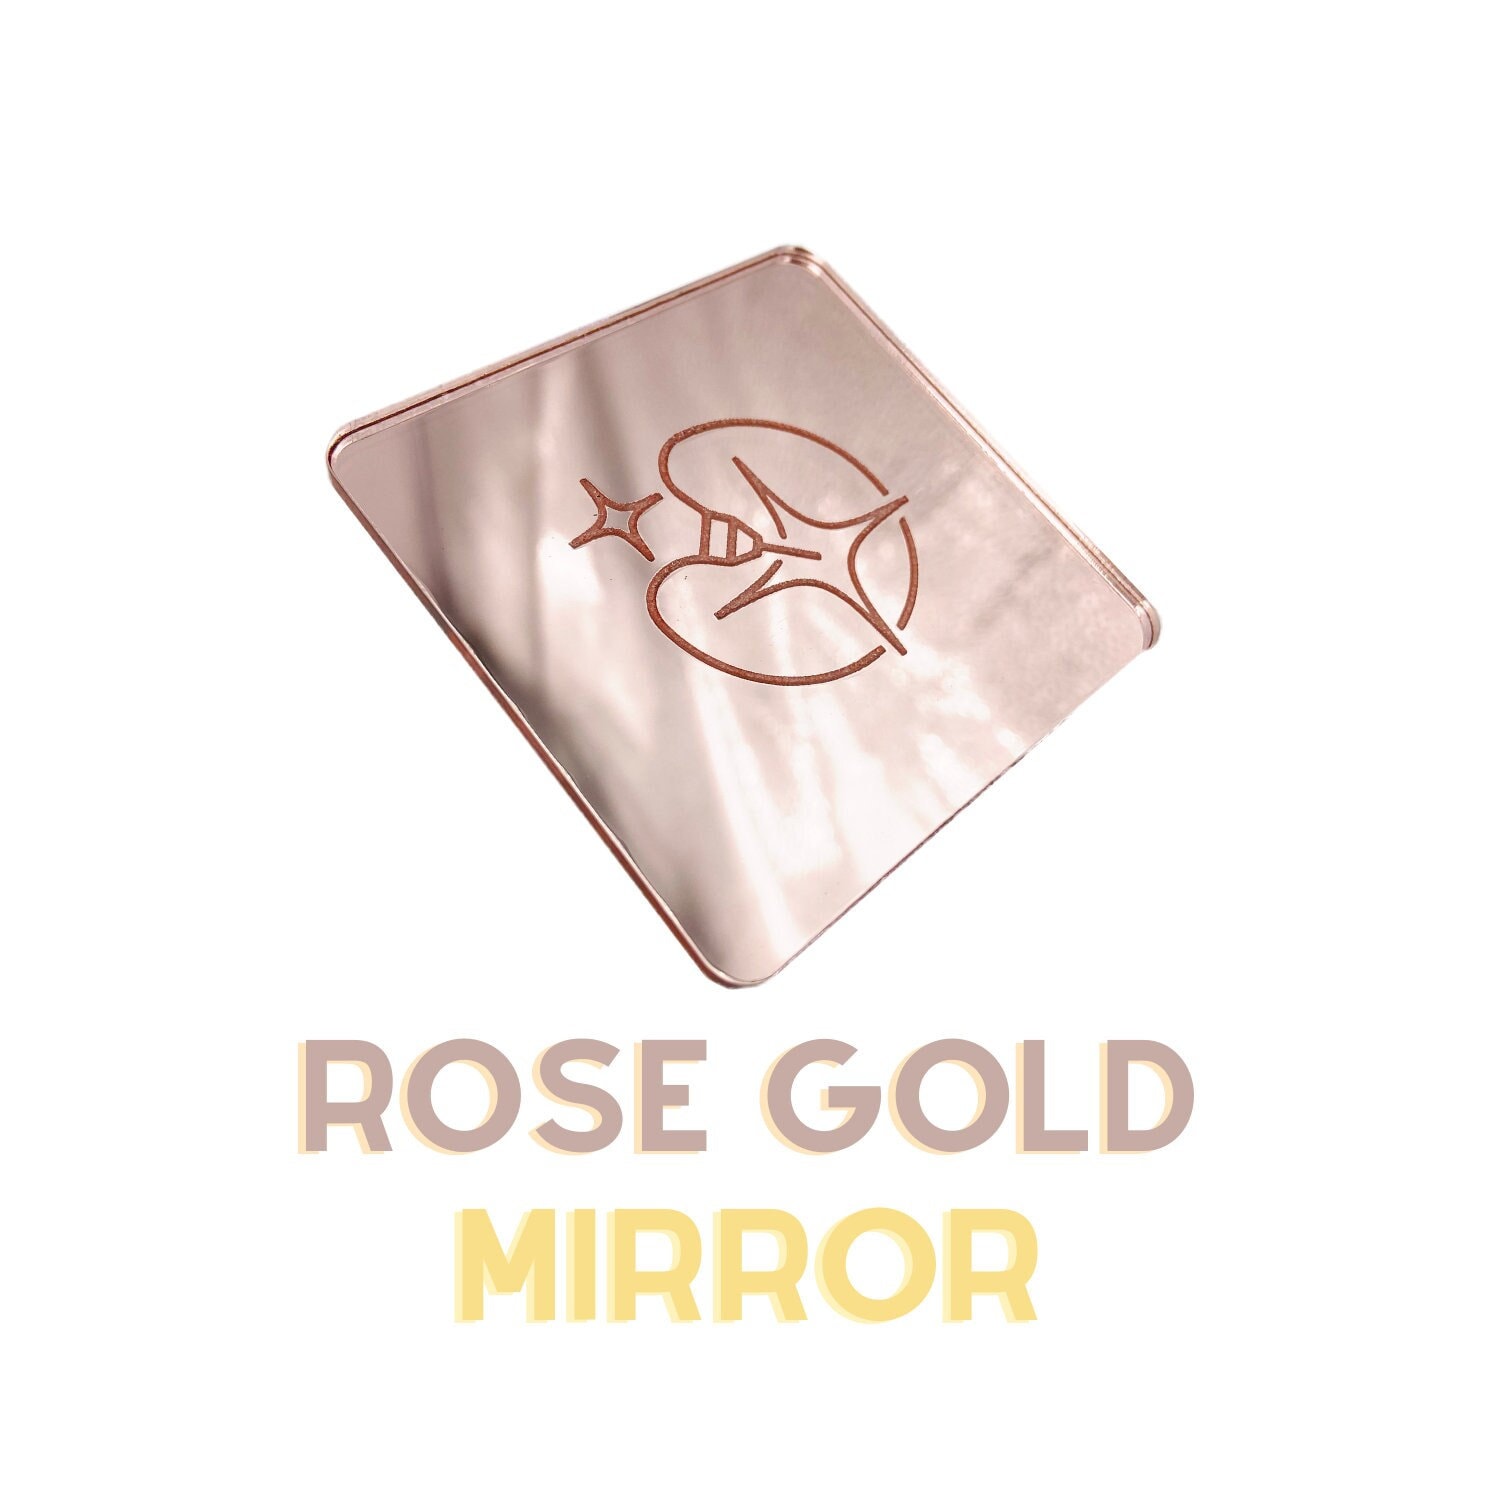 Glowforge Ready 1/8 3mm Acrylic Mirror Sheets Mirror Sheets Plexiglass Rose  Gold Gold Mirror Silver Mirror 